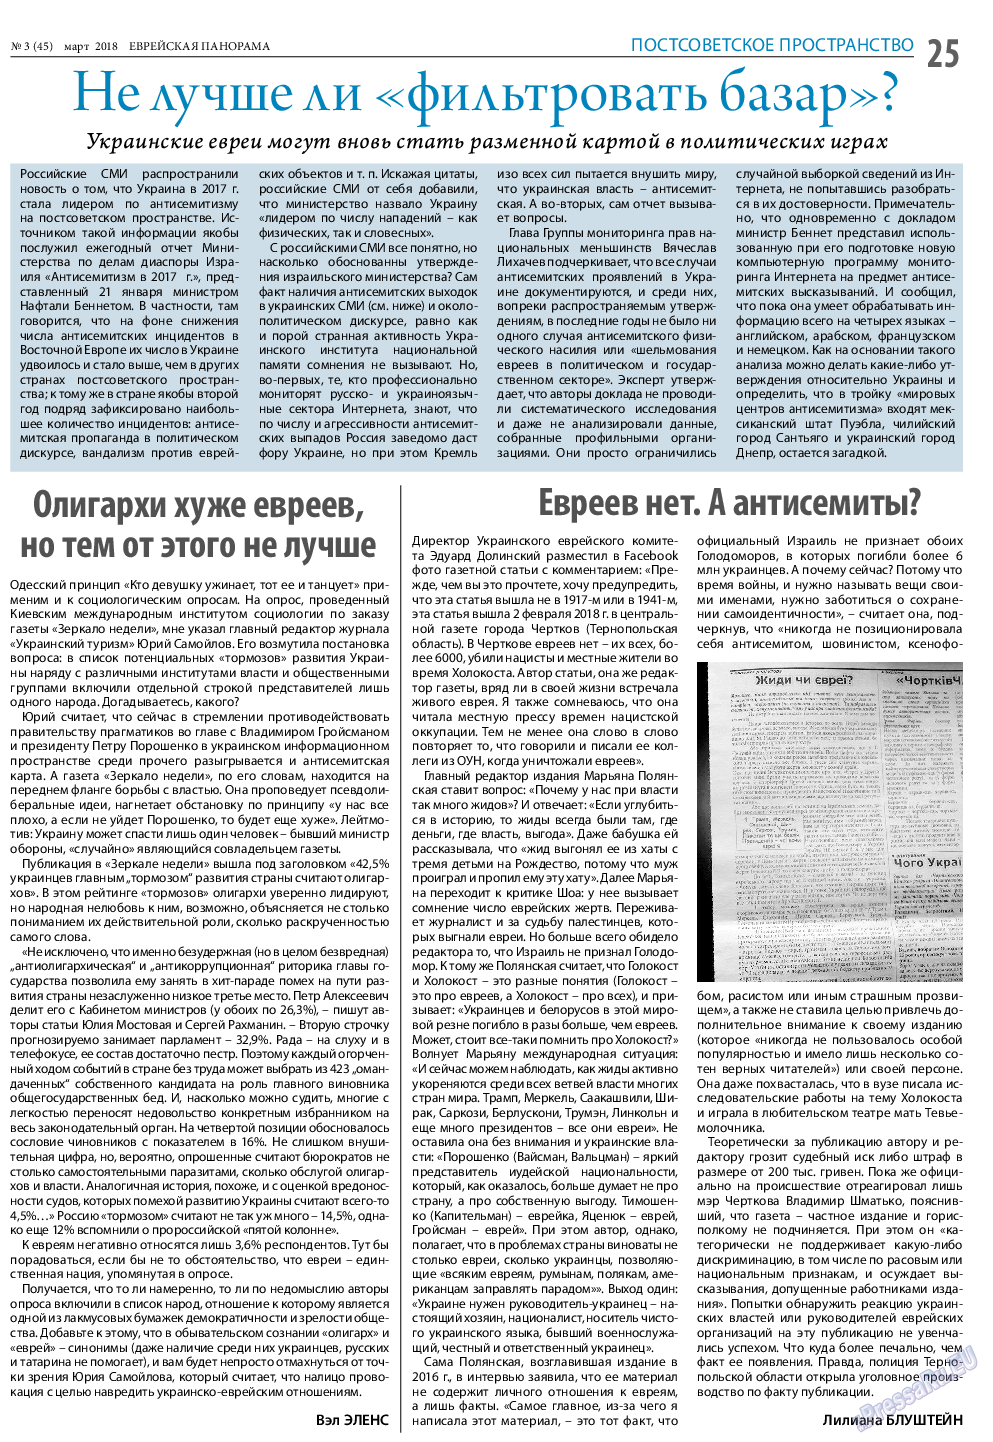 Еврейская панорама, газета. 2018 №3 стр.25